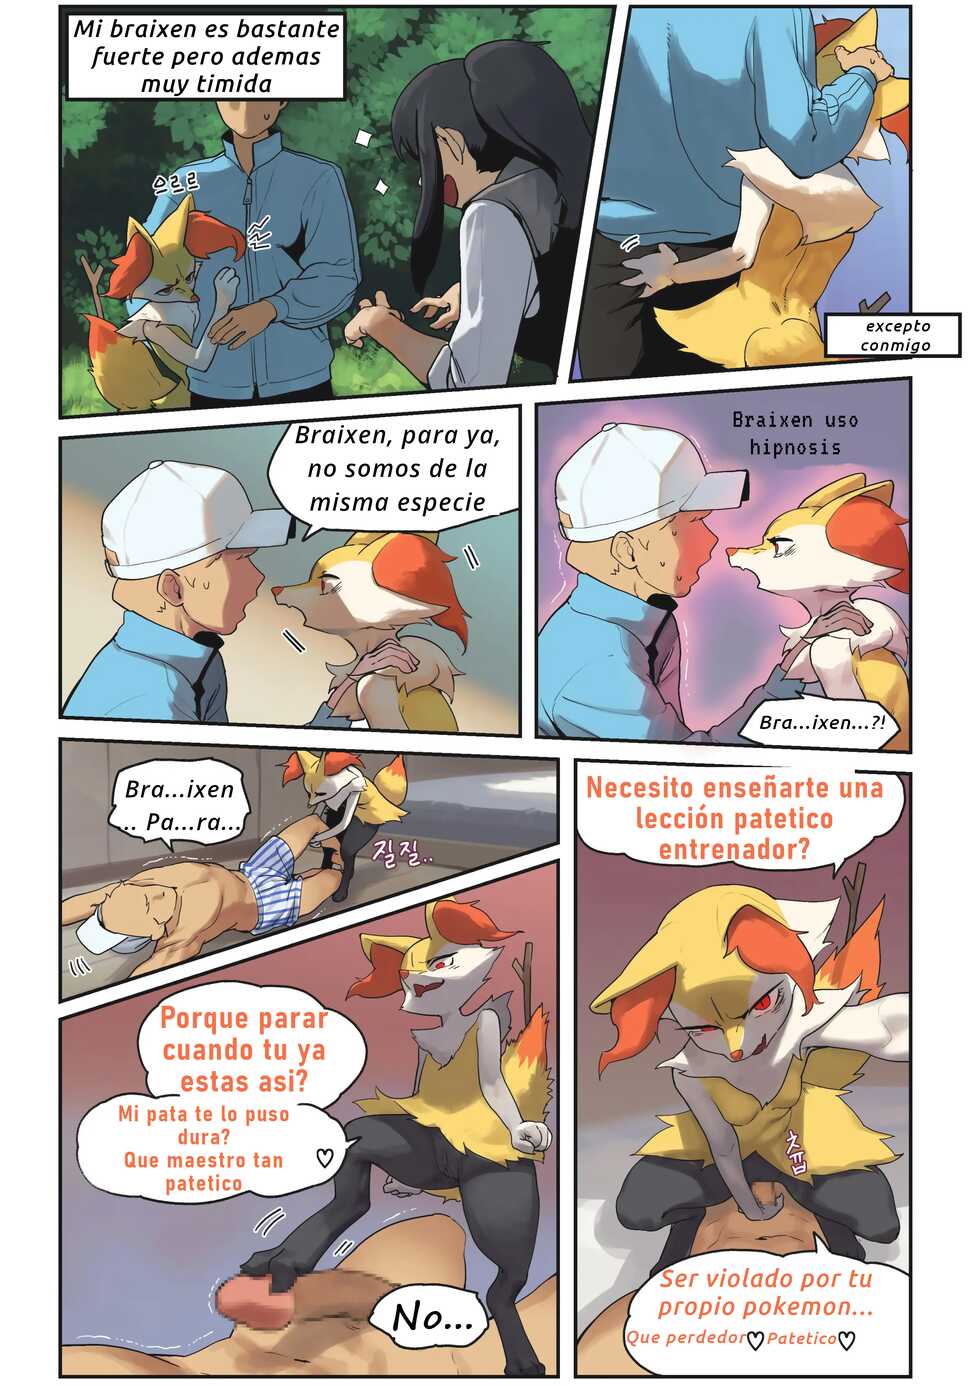 [Gudl] Braixen Uso Hipnosis (Pokemon) [Spanish] - Page 2